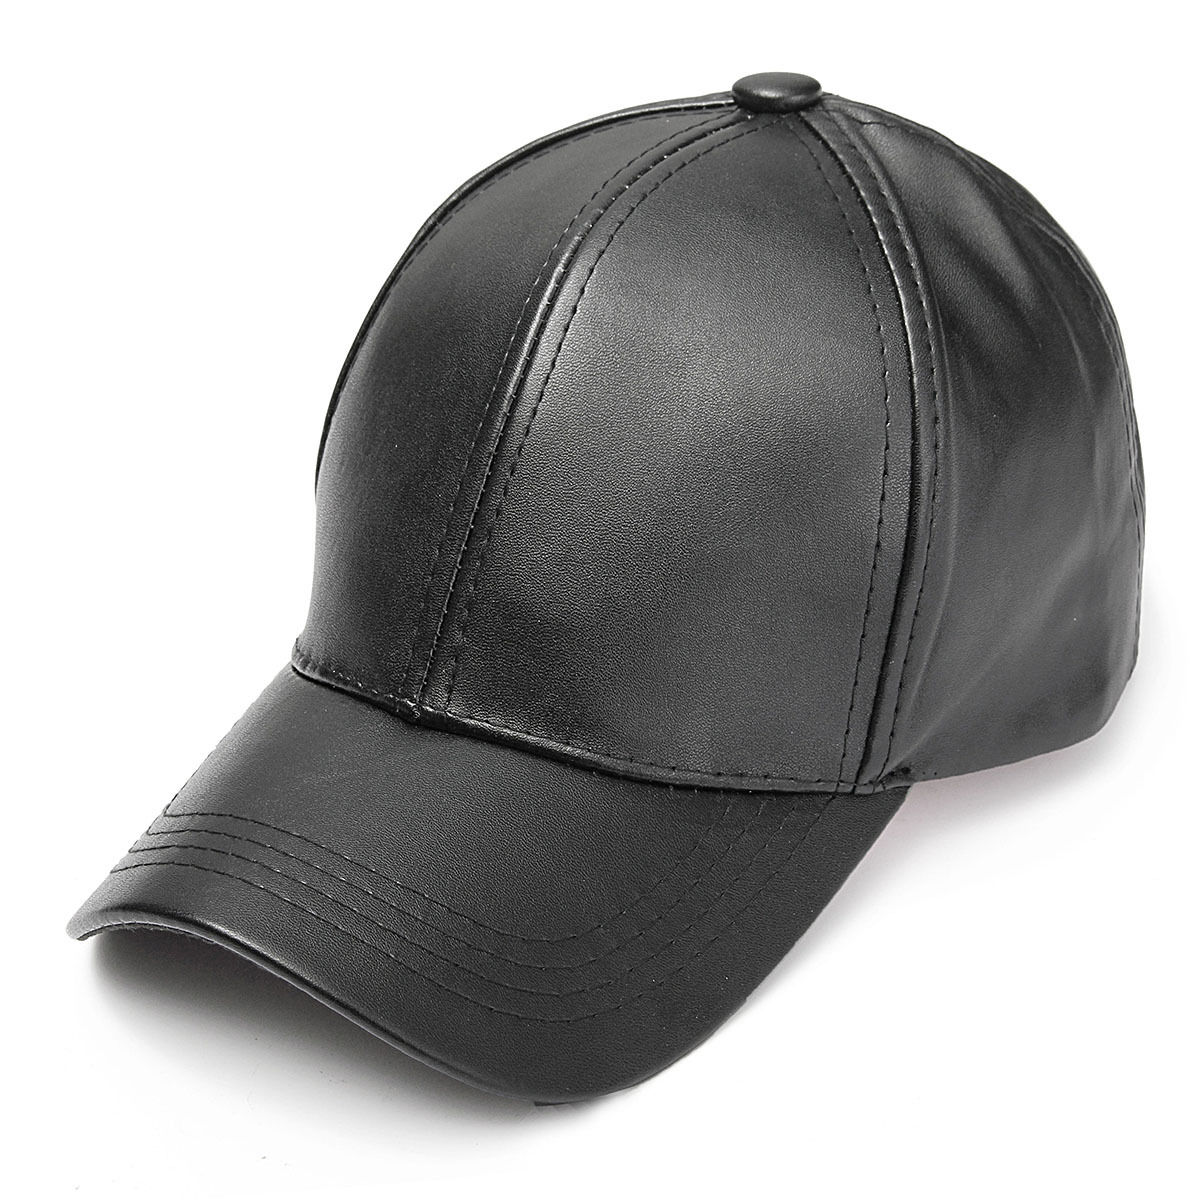 Black Leather Baseball Cap - Shop Mens Ties Online